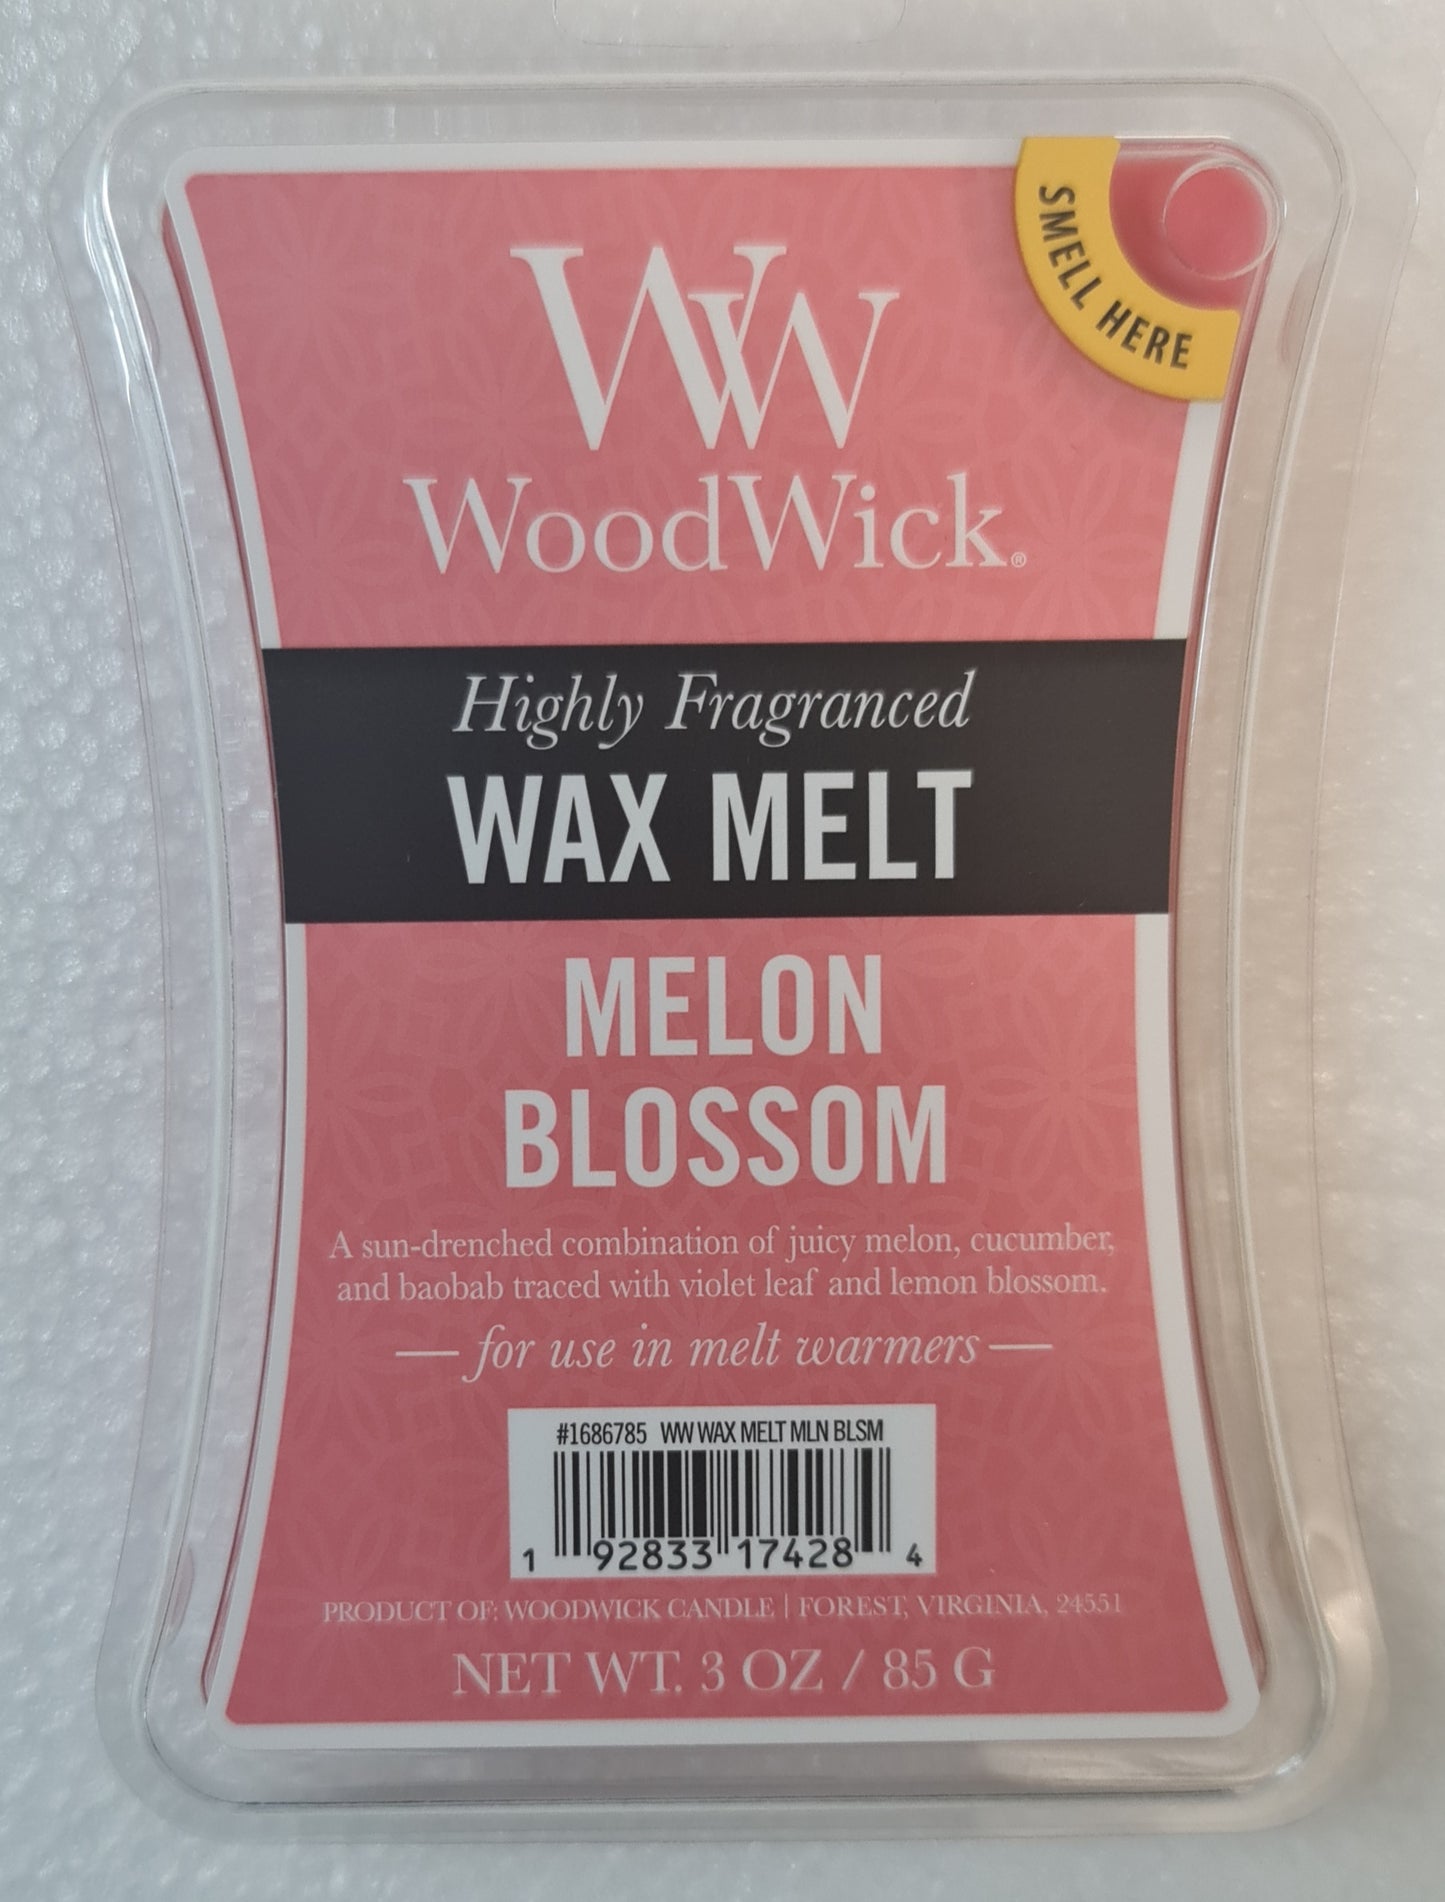 WoodWick Melon Blossom

Wax Melt